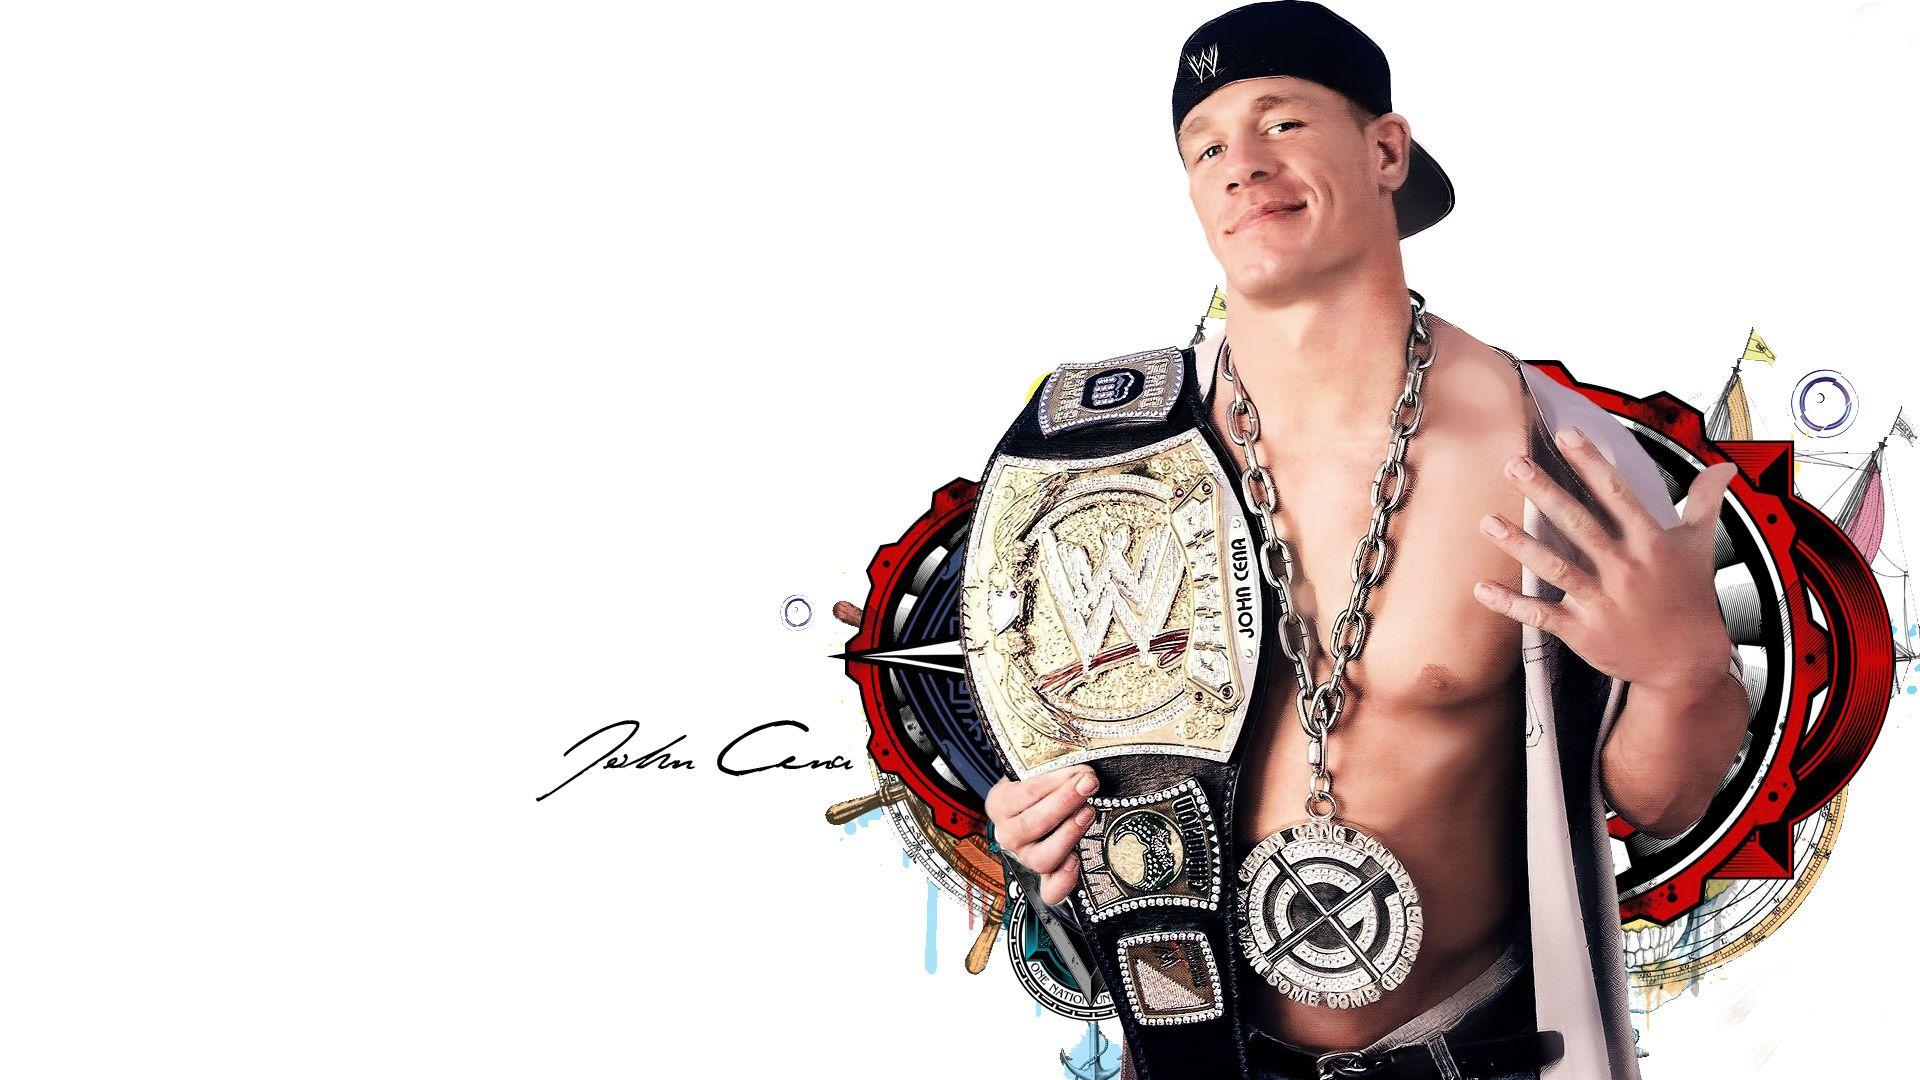 John Cena WWE Pose Wallpaper Free Wallpaper. Wallpaper